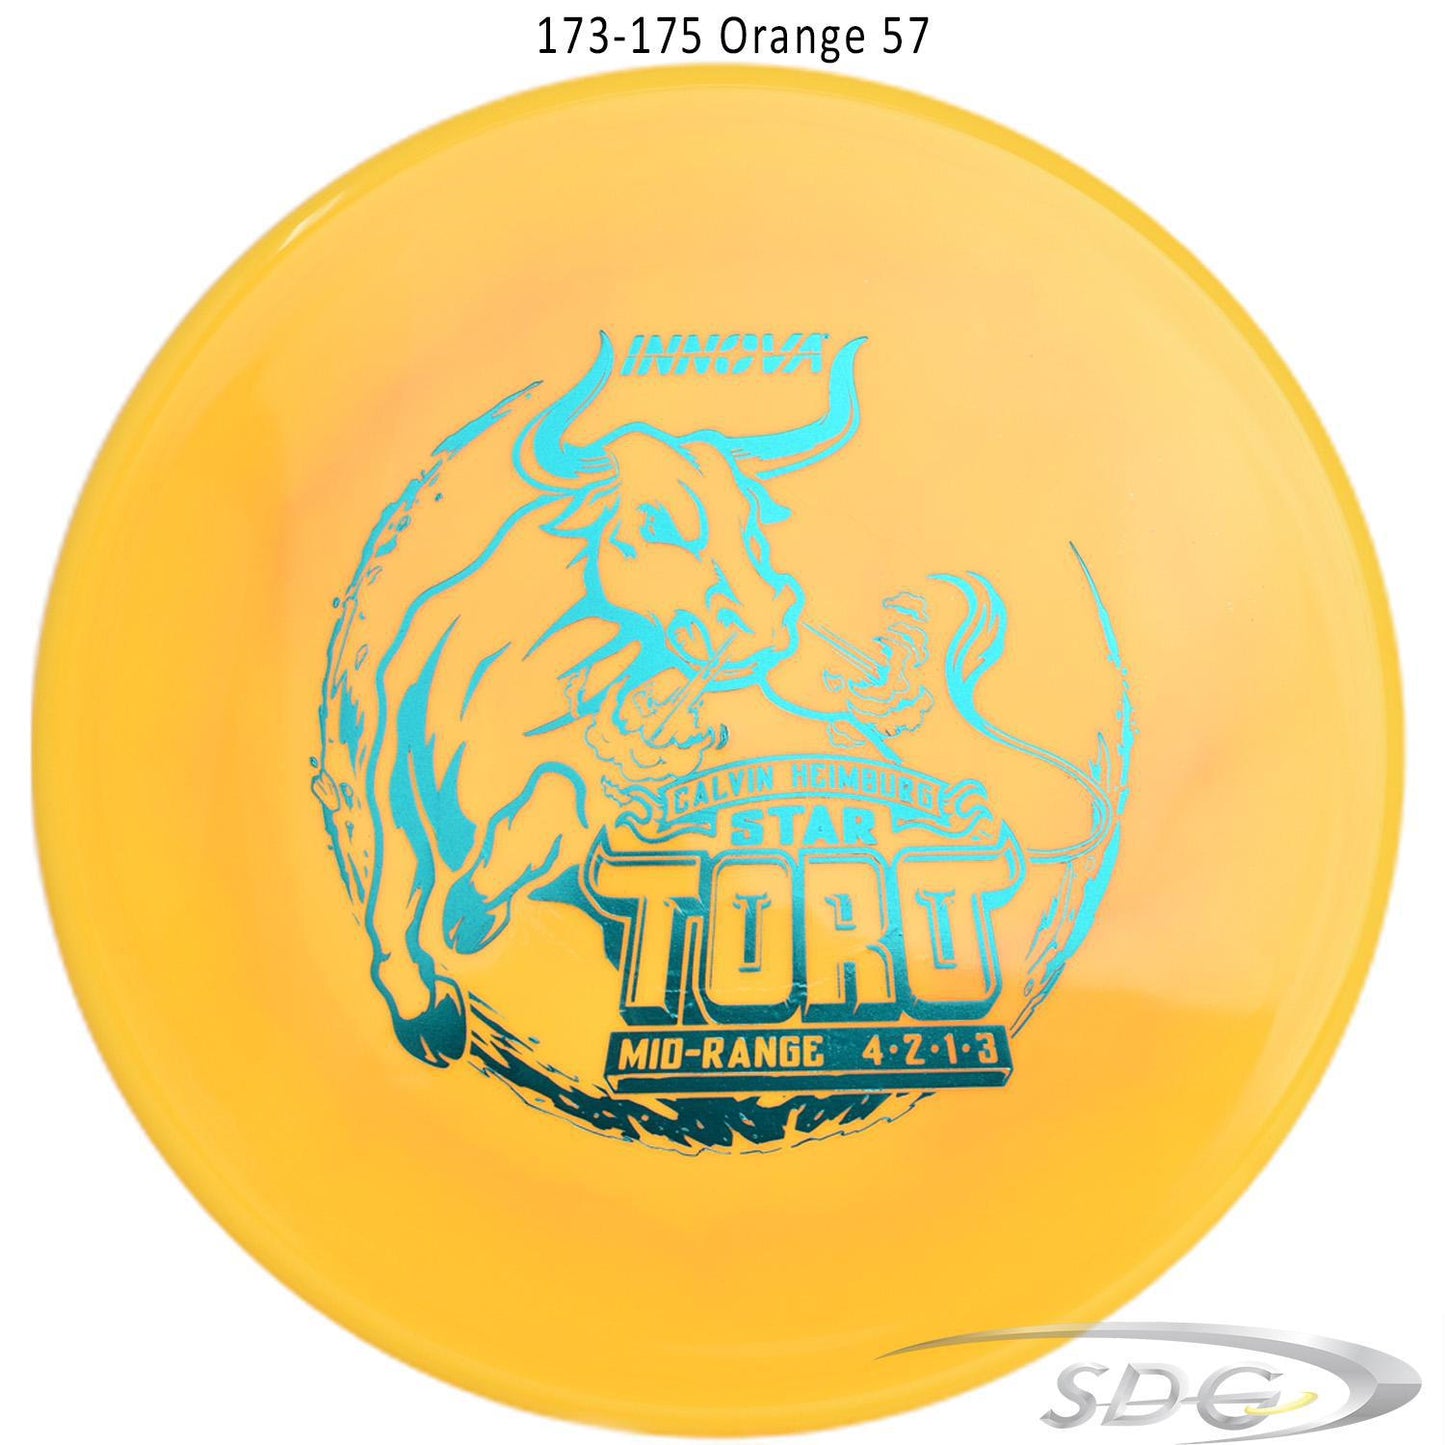 innova-star-toro-calvin-heimburg-signature-disc-golf-mid-range 173-175 Orange 57 